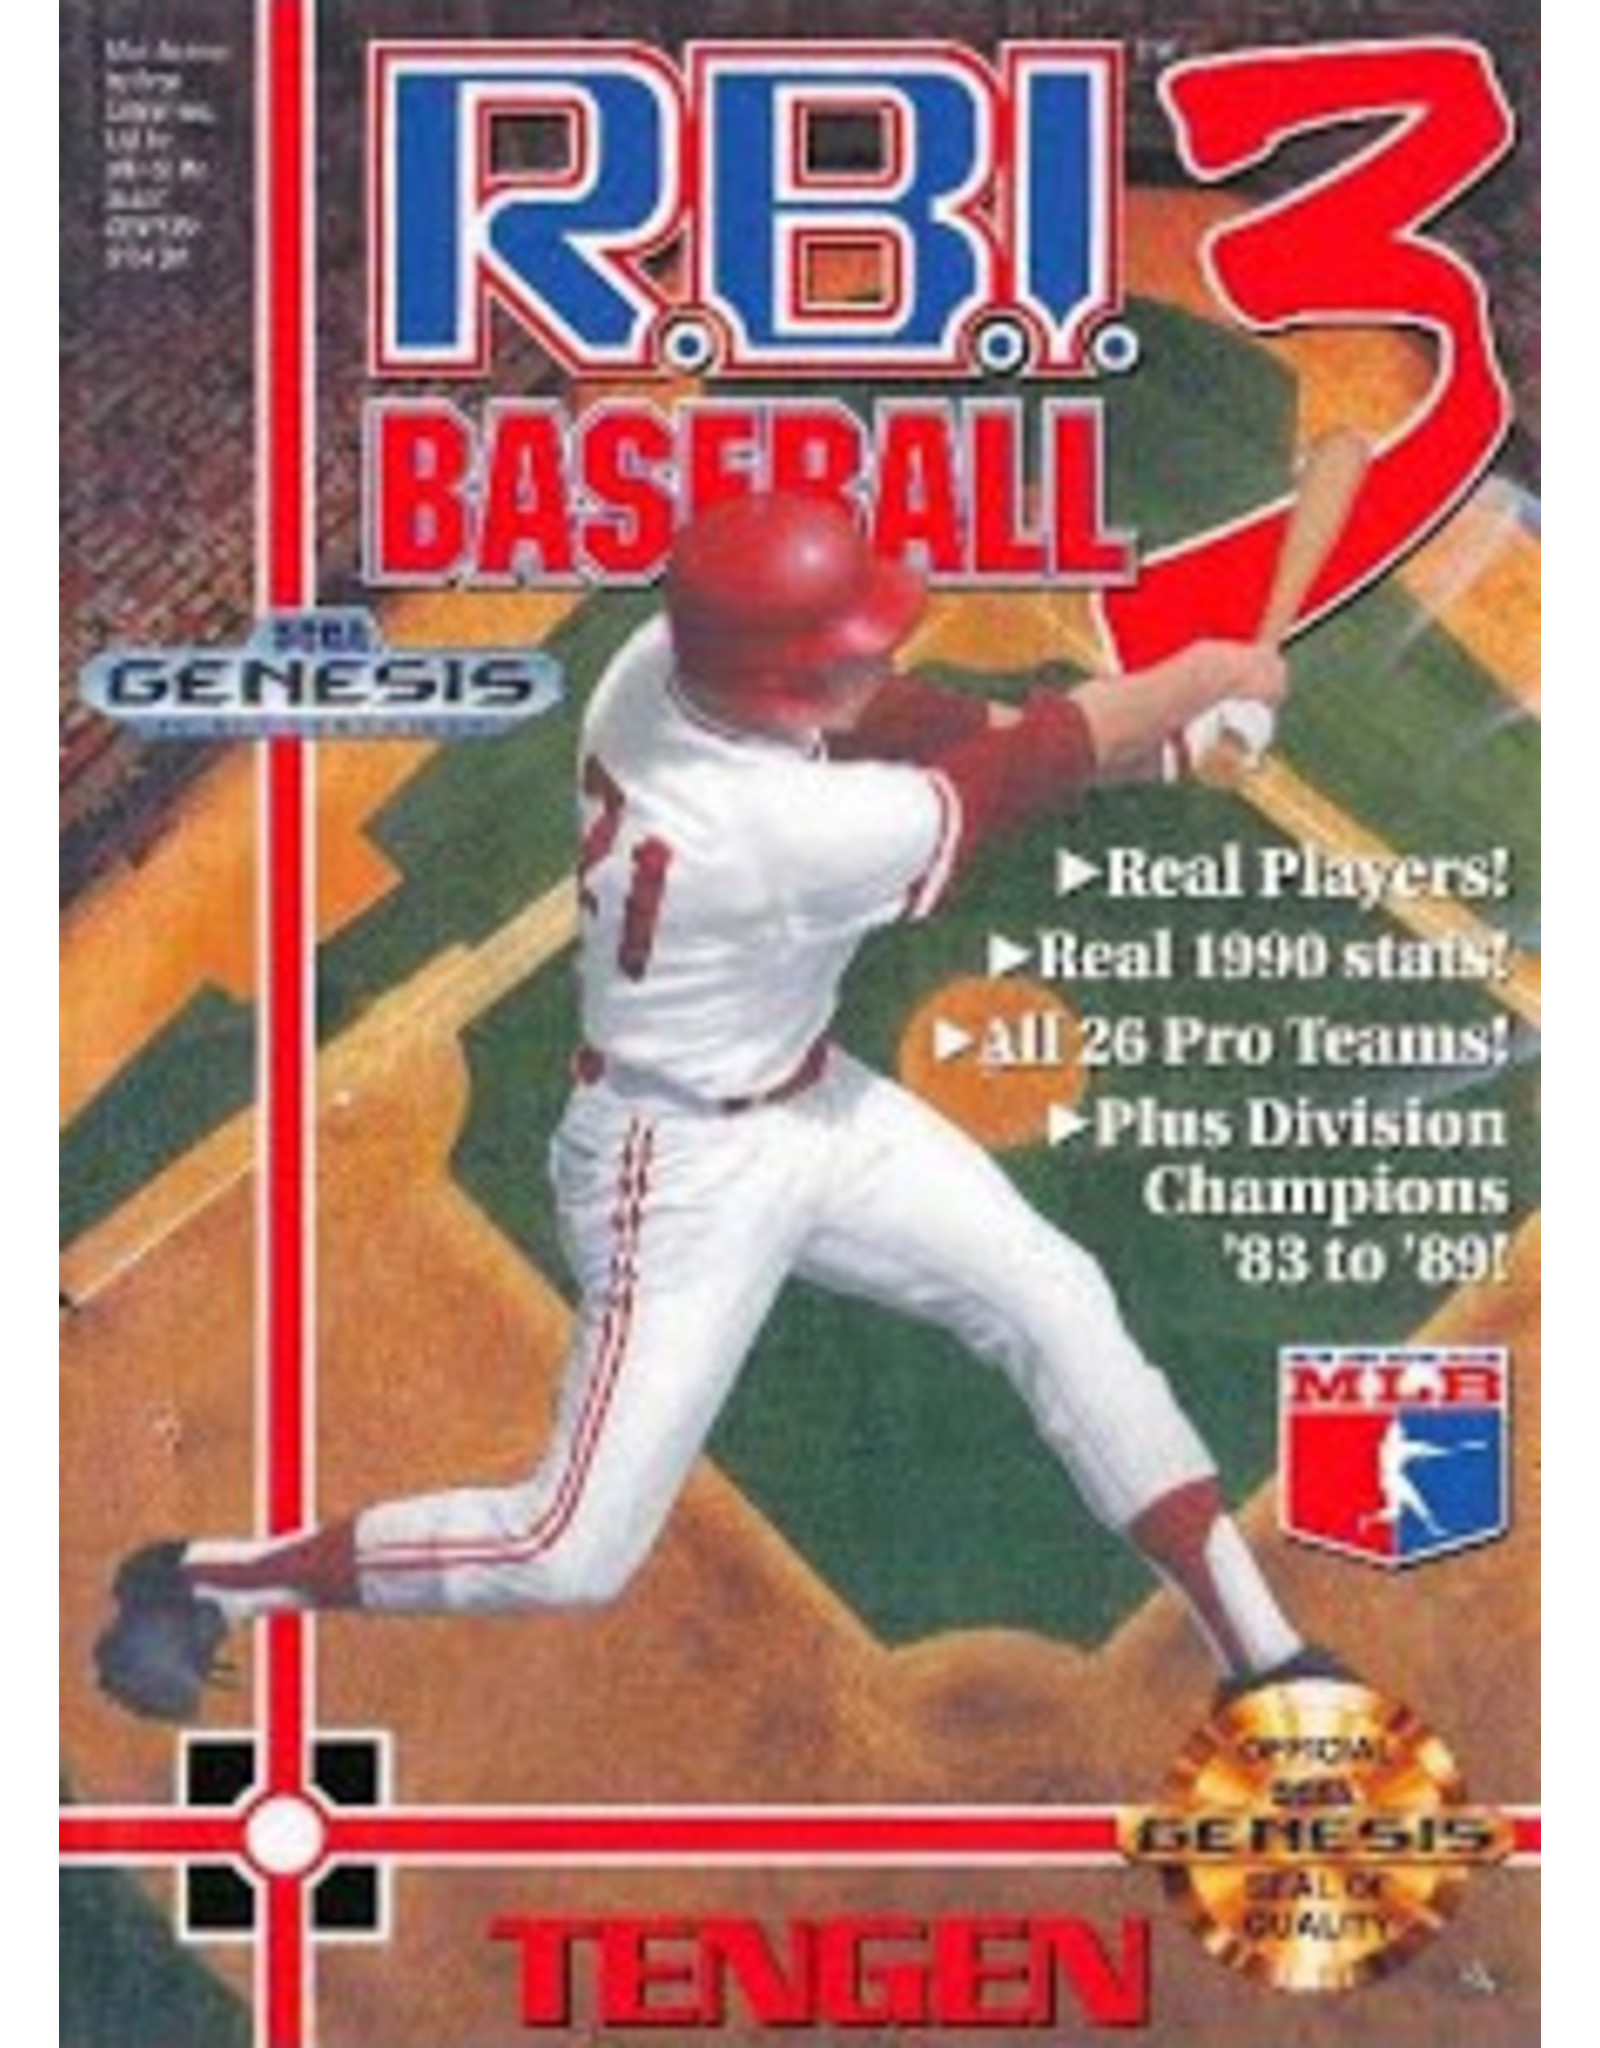 Sega Genesis RBI Baseball 3 (Cart Only)